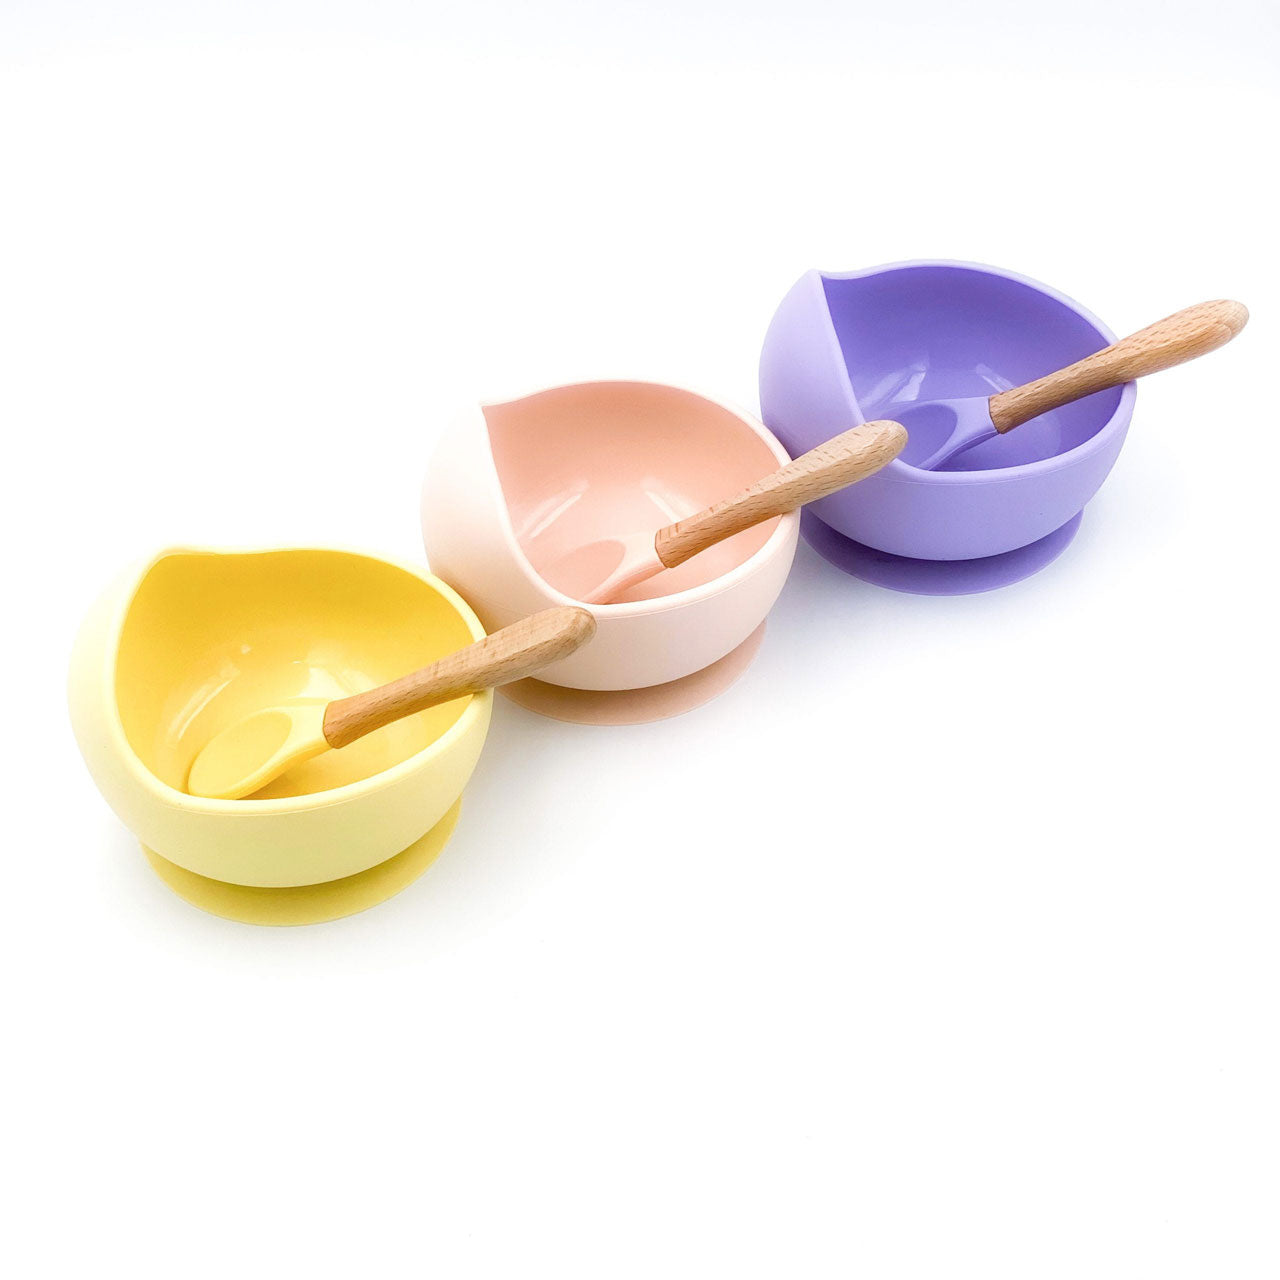 Silicone Feeding Set (3 pieces) - Bib, Suction Bowl & Spoon